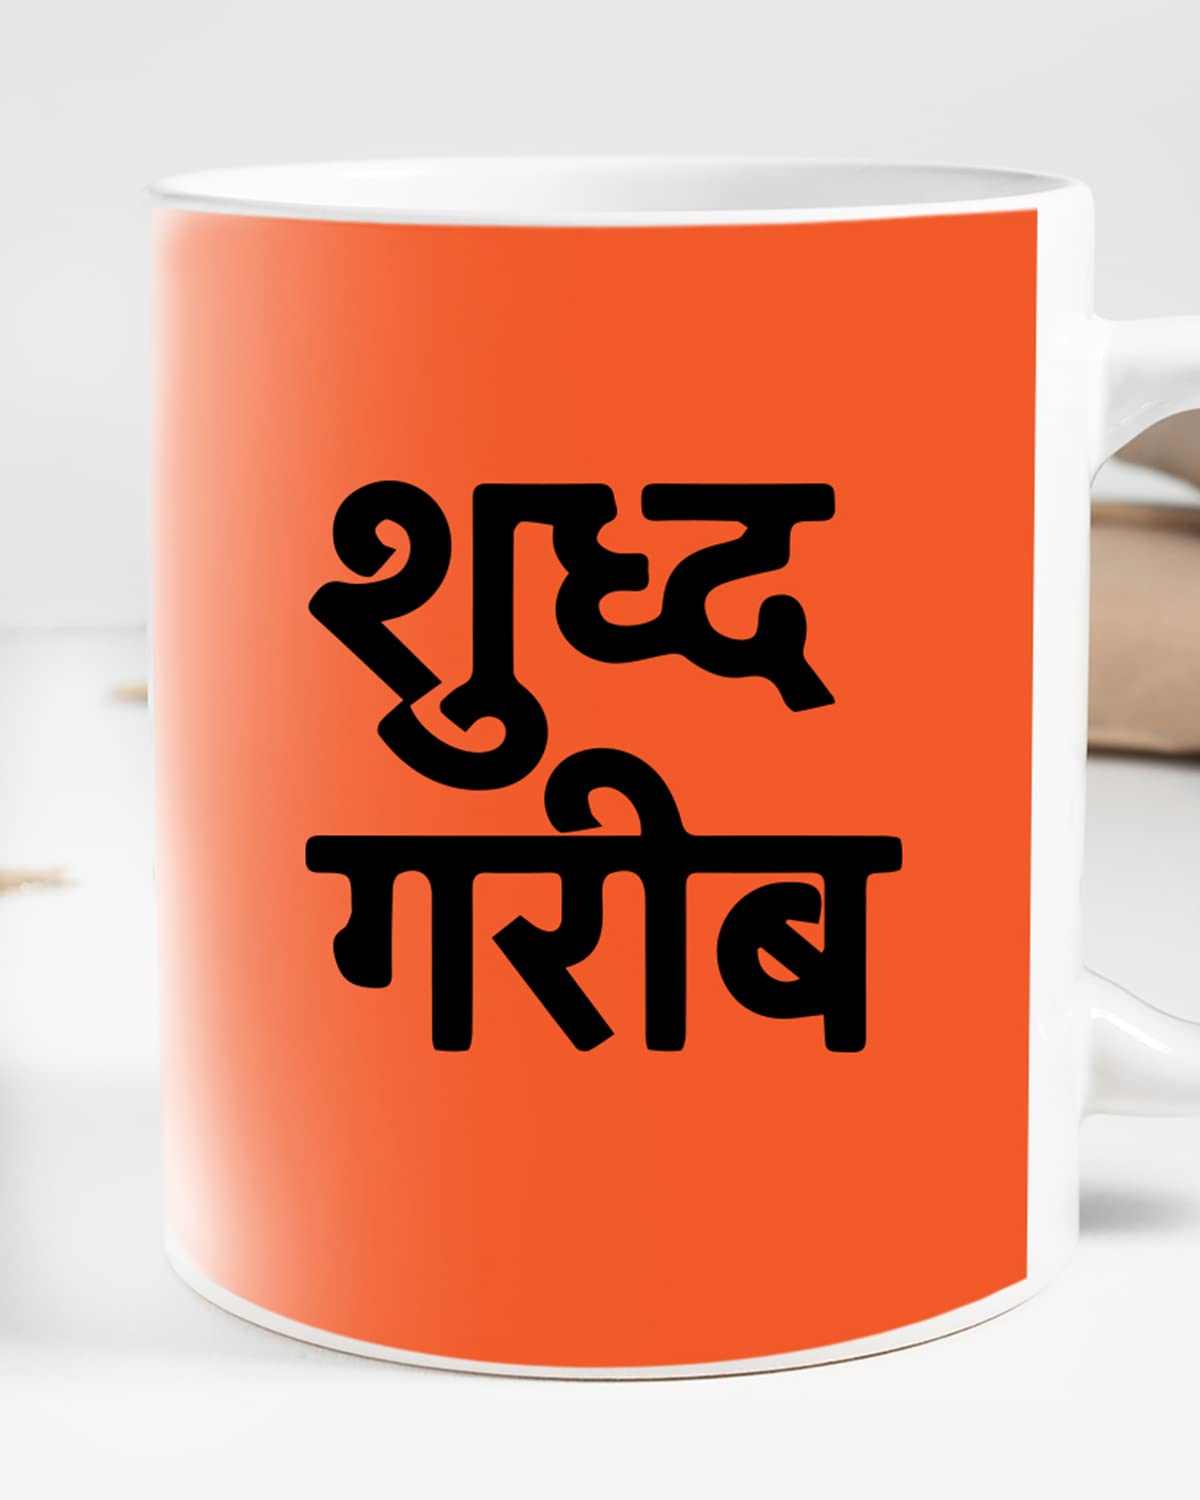 SHUDH GAREEB Coffee Mug - Gift for Friend, Birthday Gift, Birthday Mug, Sarcasm Quotes Mug, Mugs with Funny & Funky Dialogues, Bollywood Mugs, Funny Mugs for Him & Her